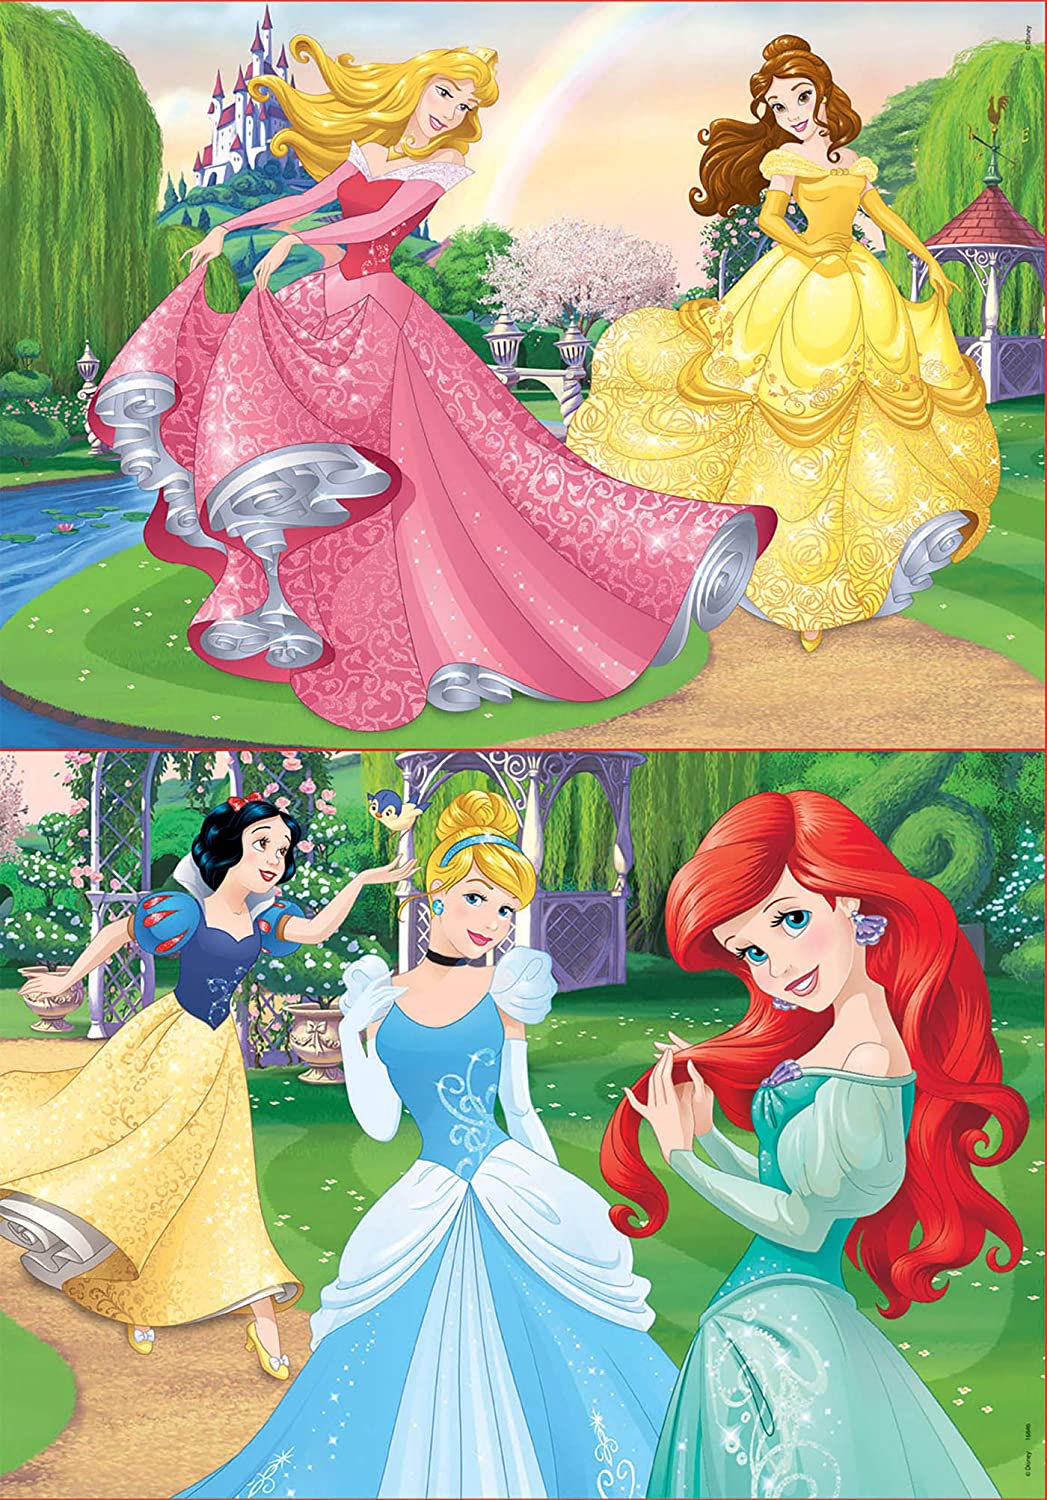 Educa 16846 Puzzle Kids 2x20pcs Disney Princess